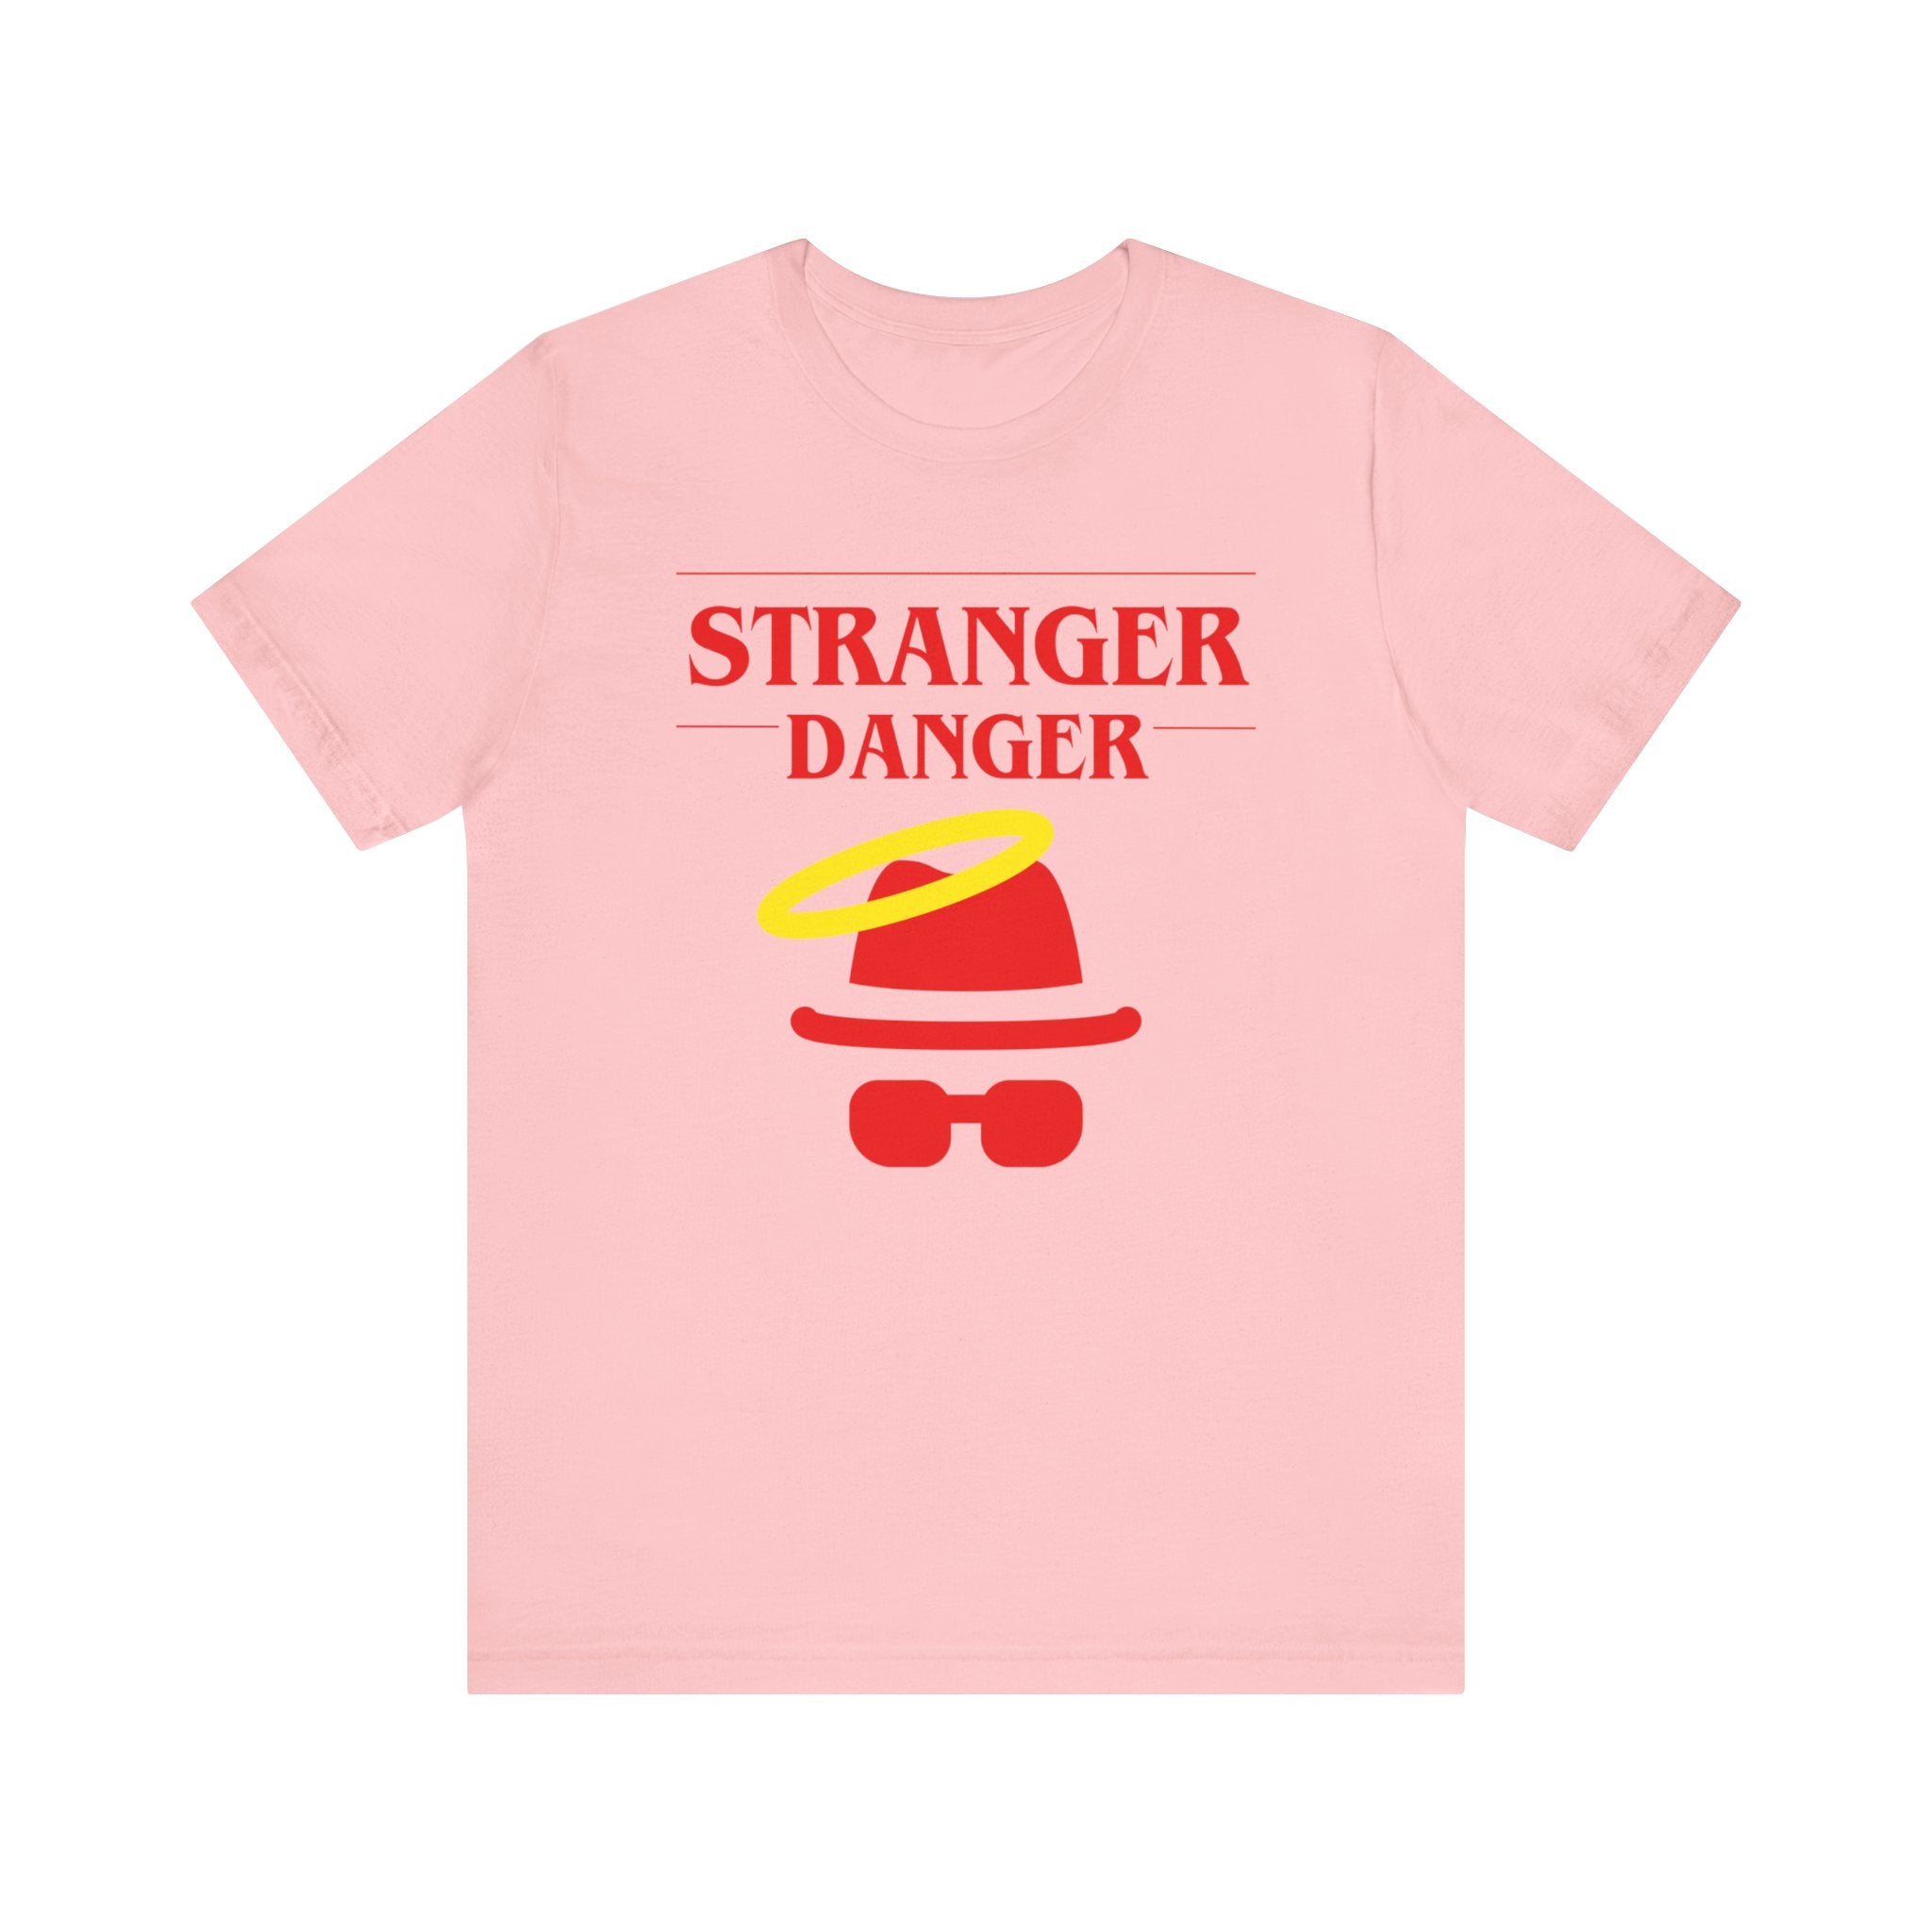 FURDreams “Stranger” II Unisex Jersey Short Sleeve Tee